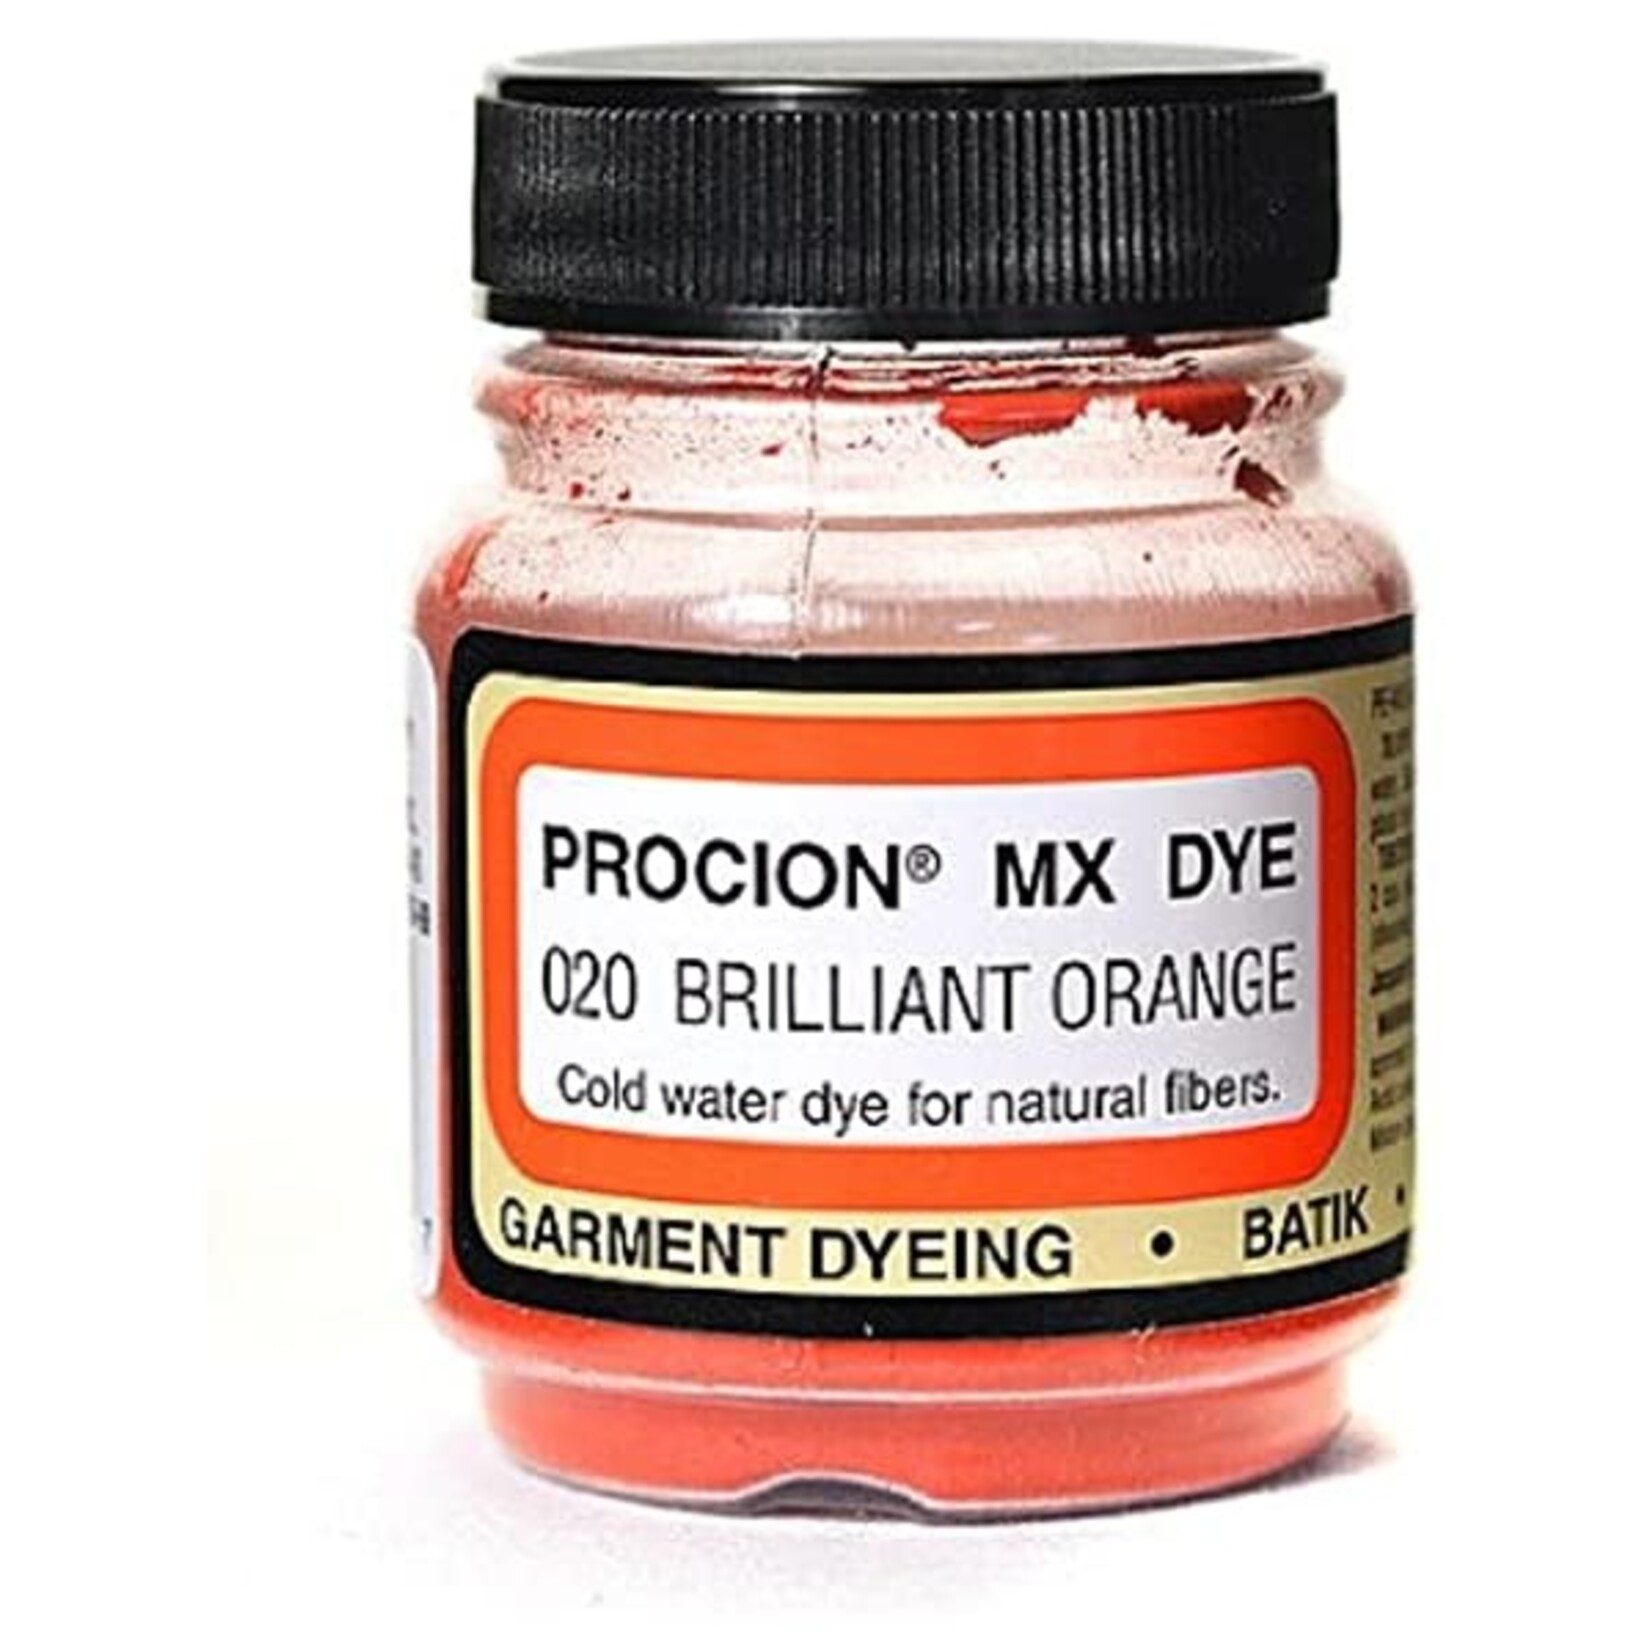 Jacquard Procion 2/3 Oz Brilliant Orange